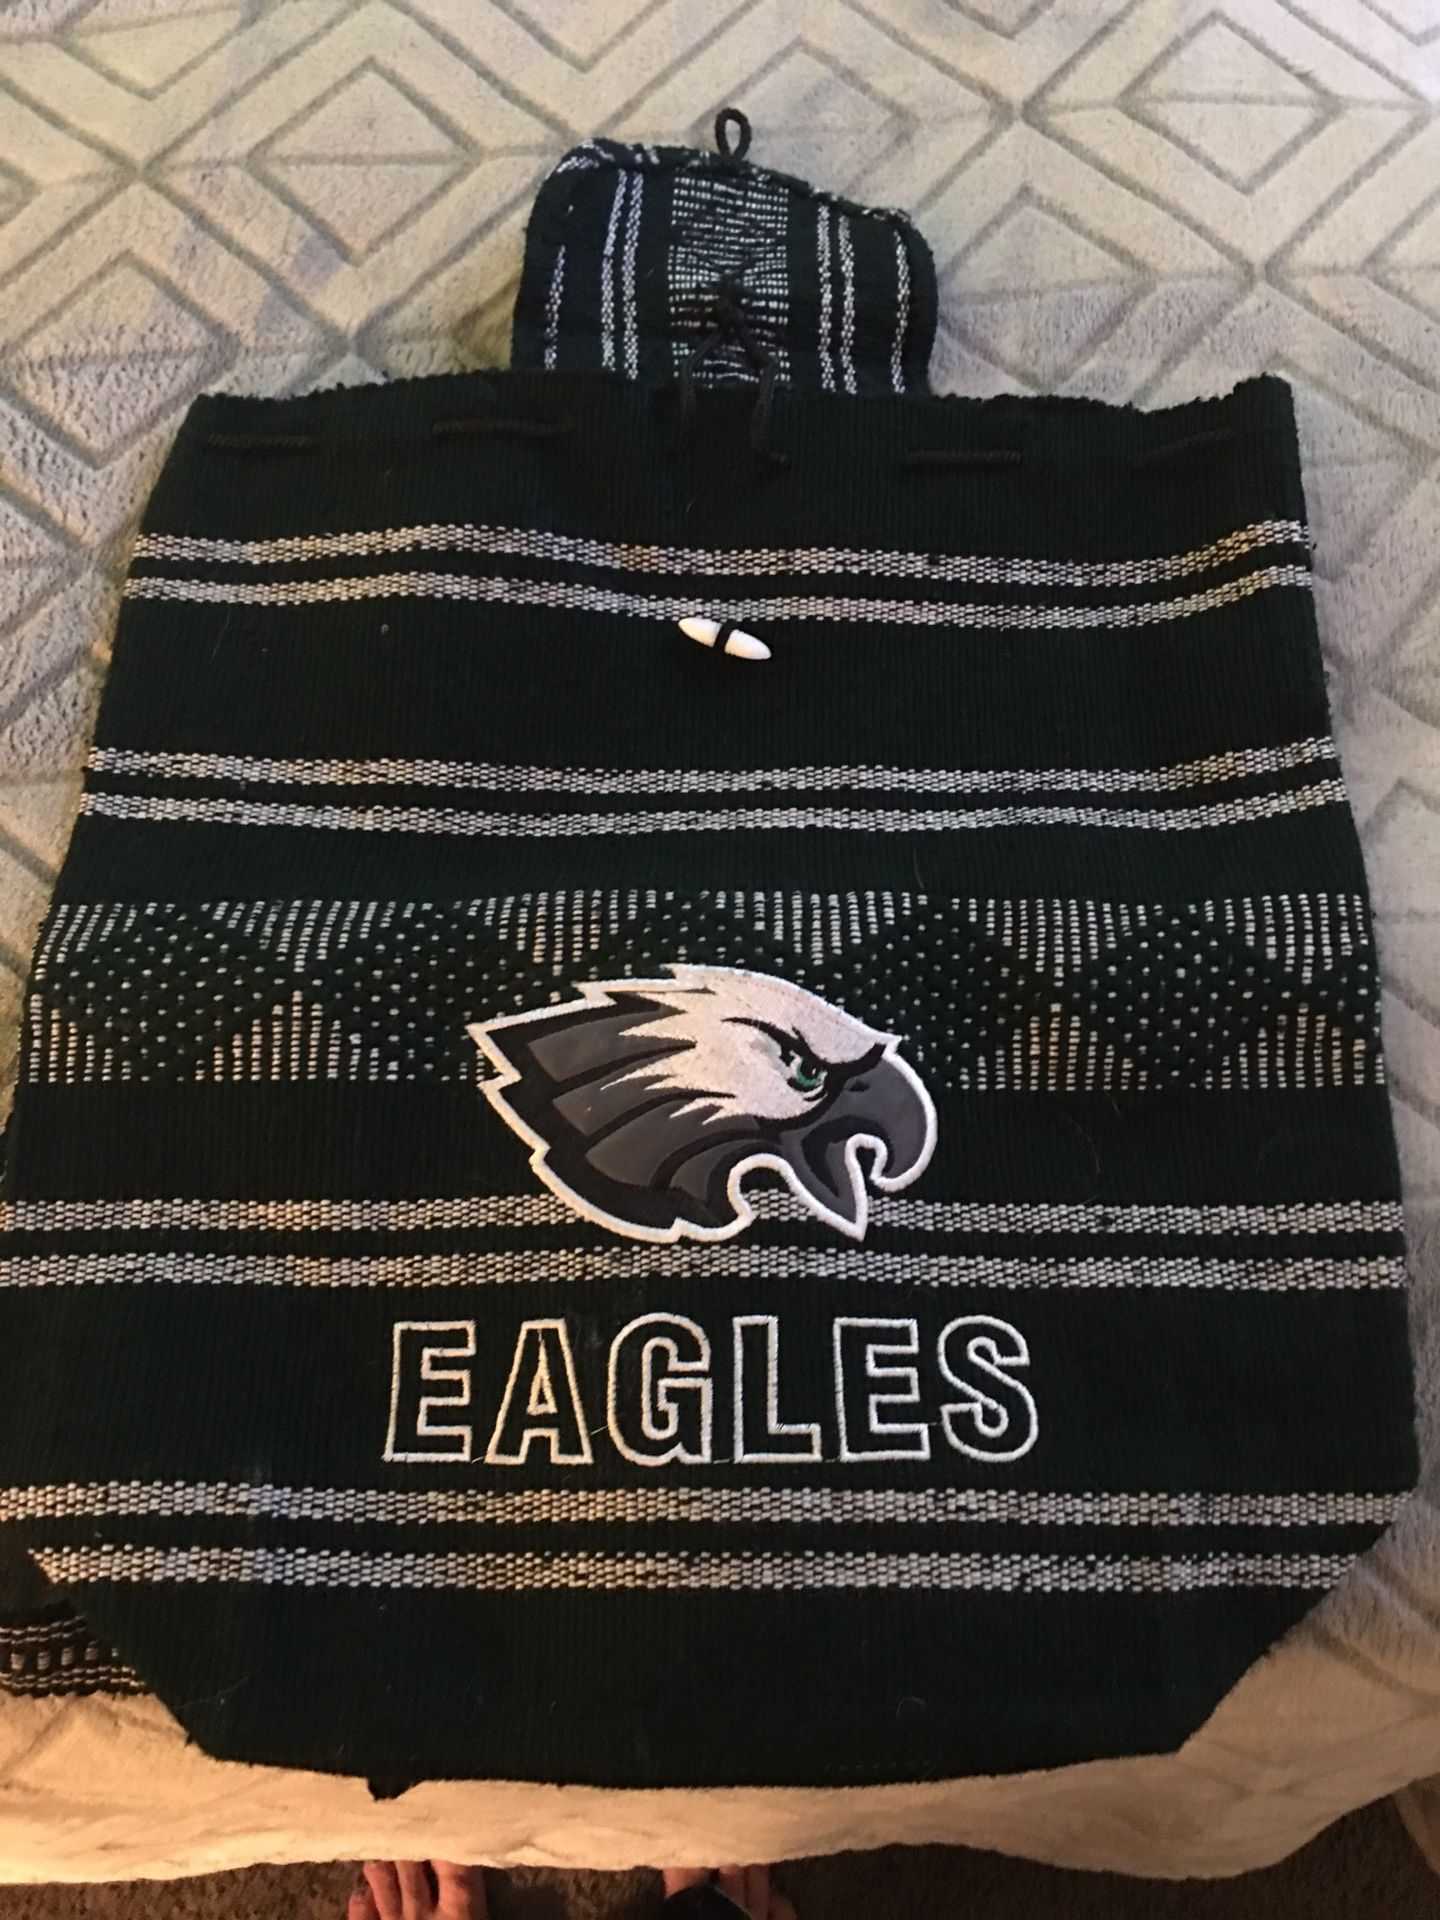 Eagles Backpack / purse